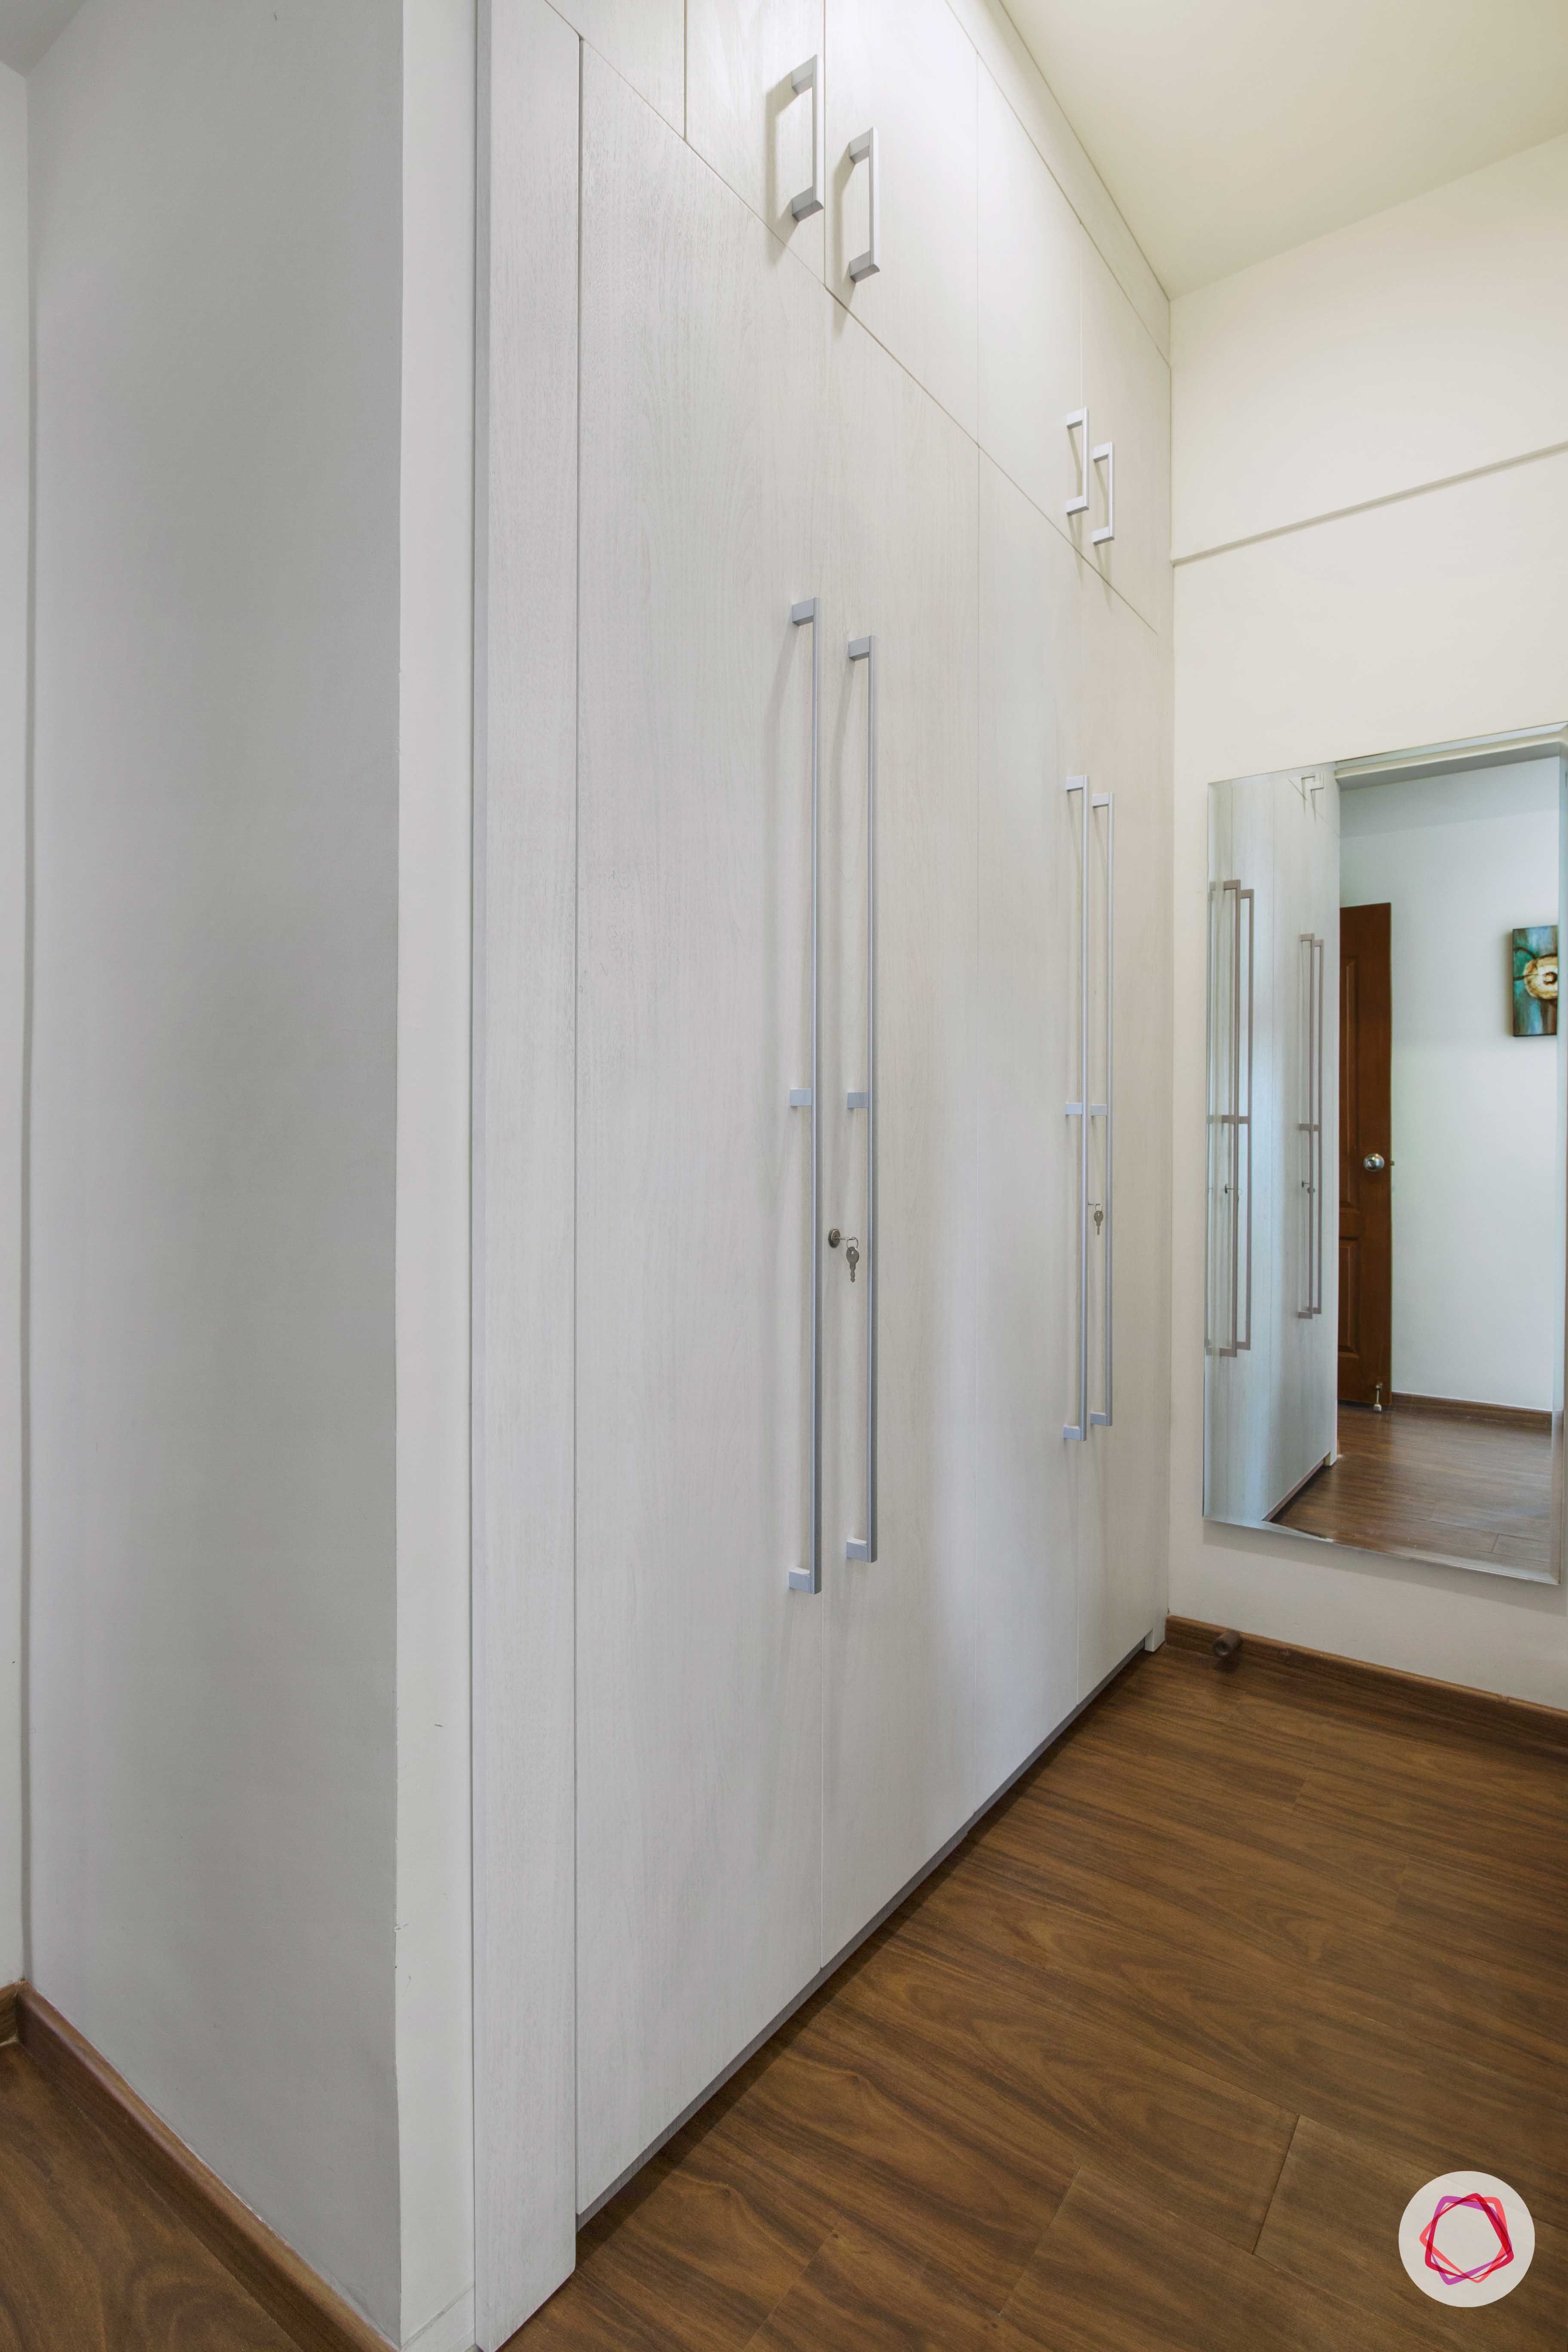 3 bedroom flat design-white membrane cabinet-walk-in cabinet-walk-in closet designs